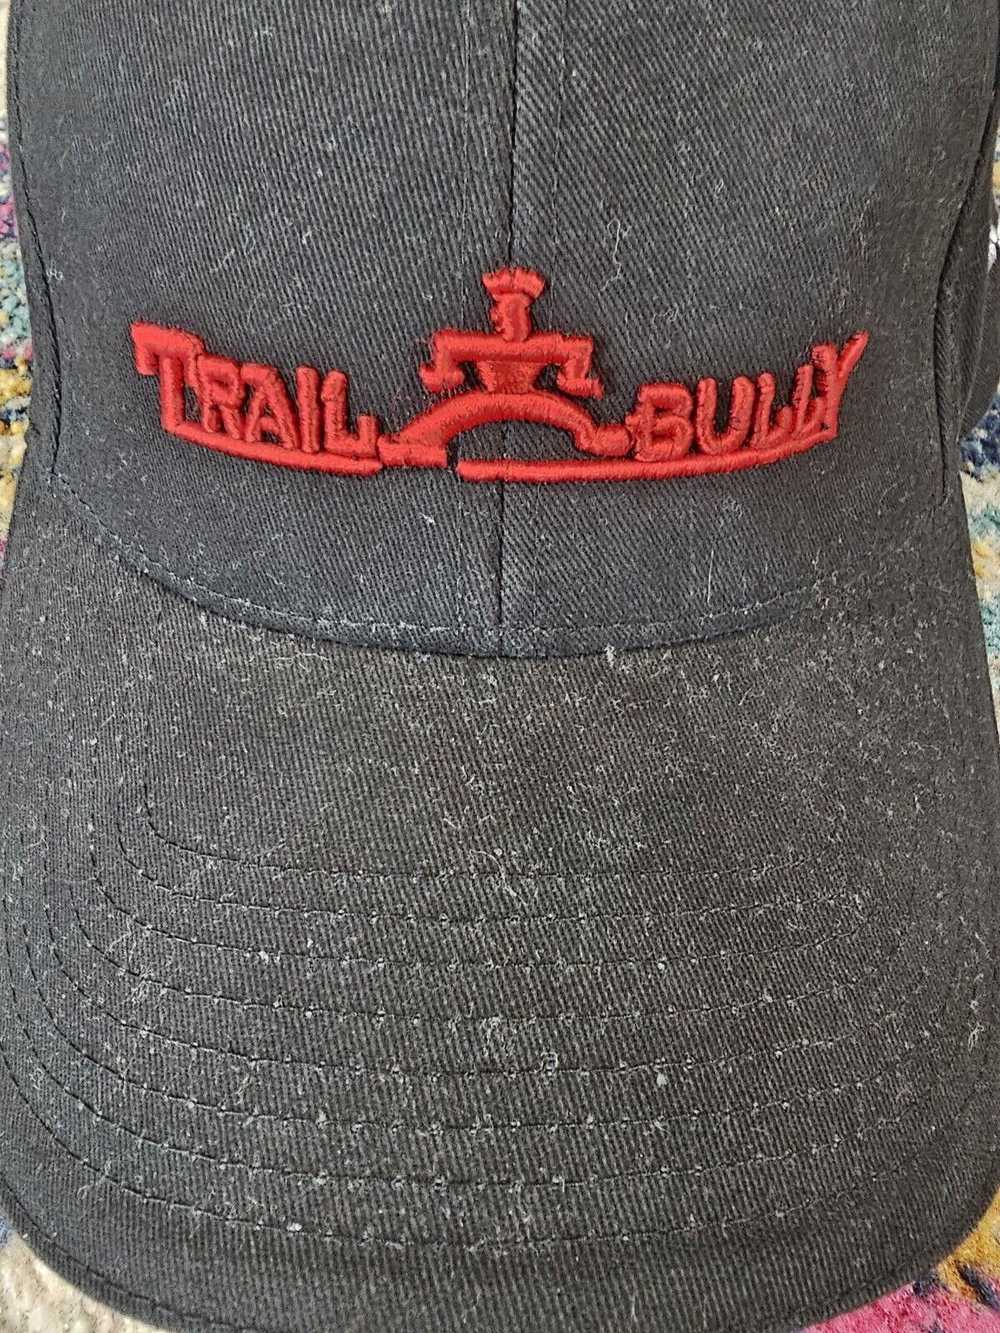 Designer PistenBully "Trail Bully" Hat Black OSFA… - image 3